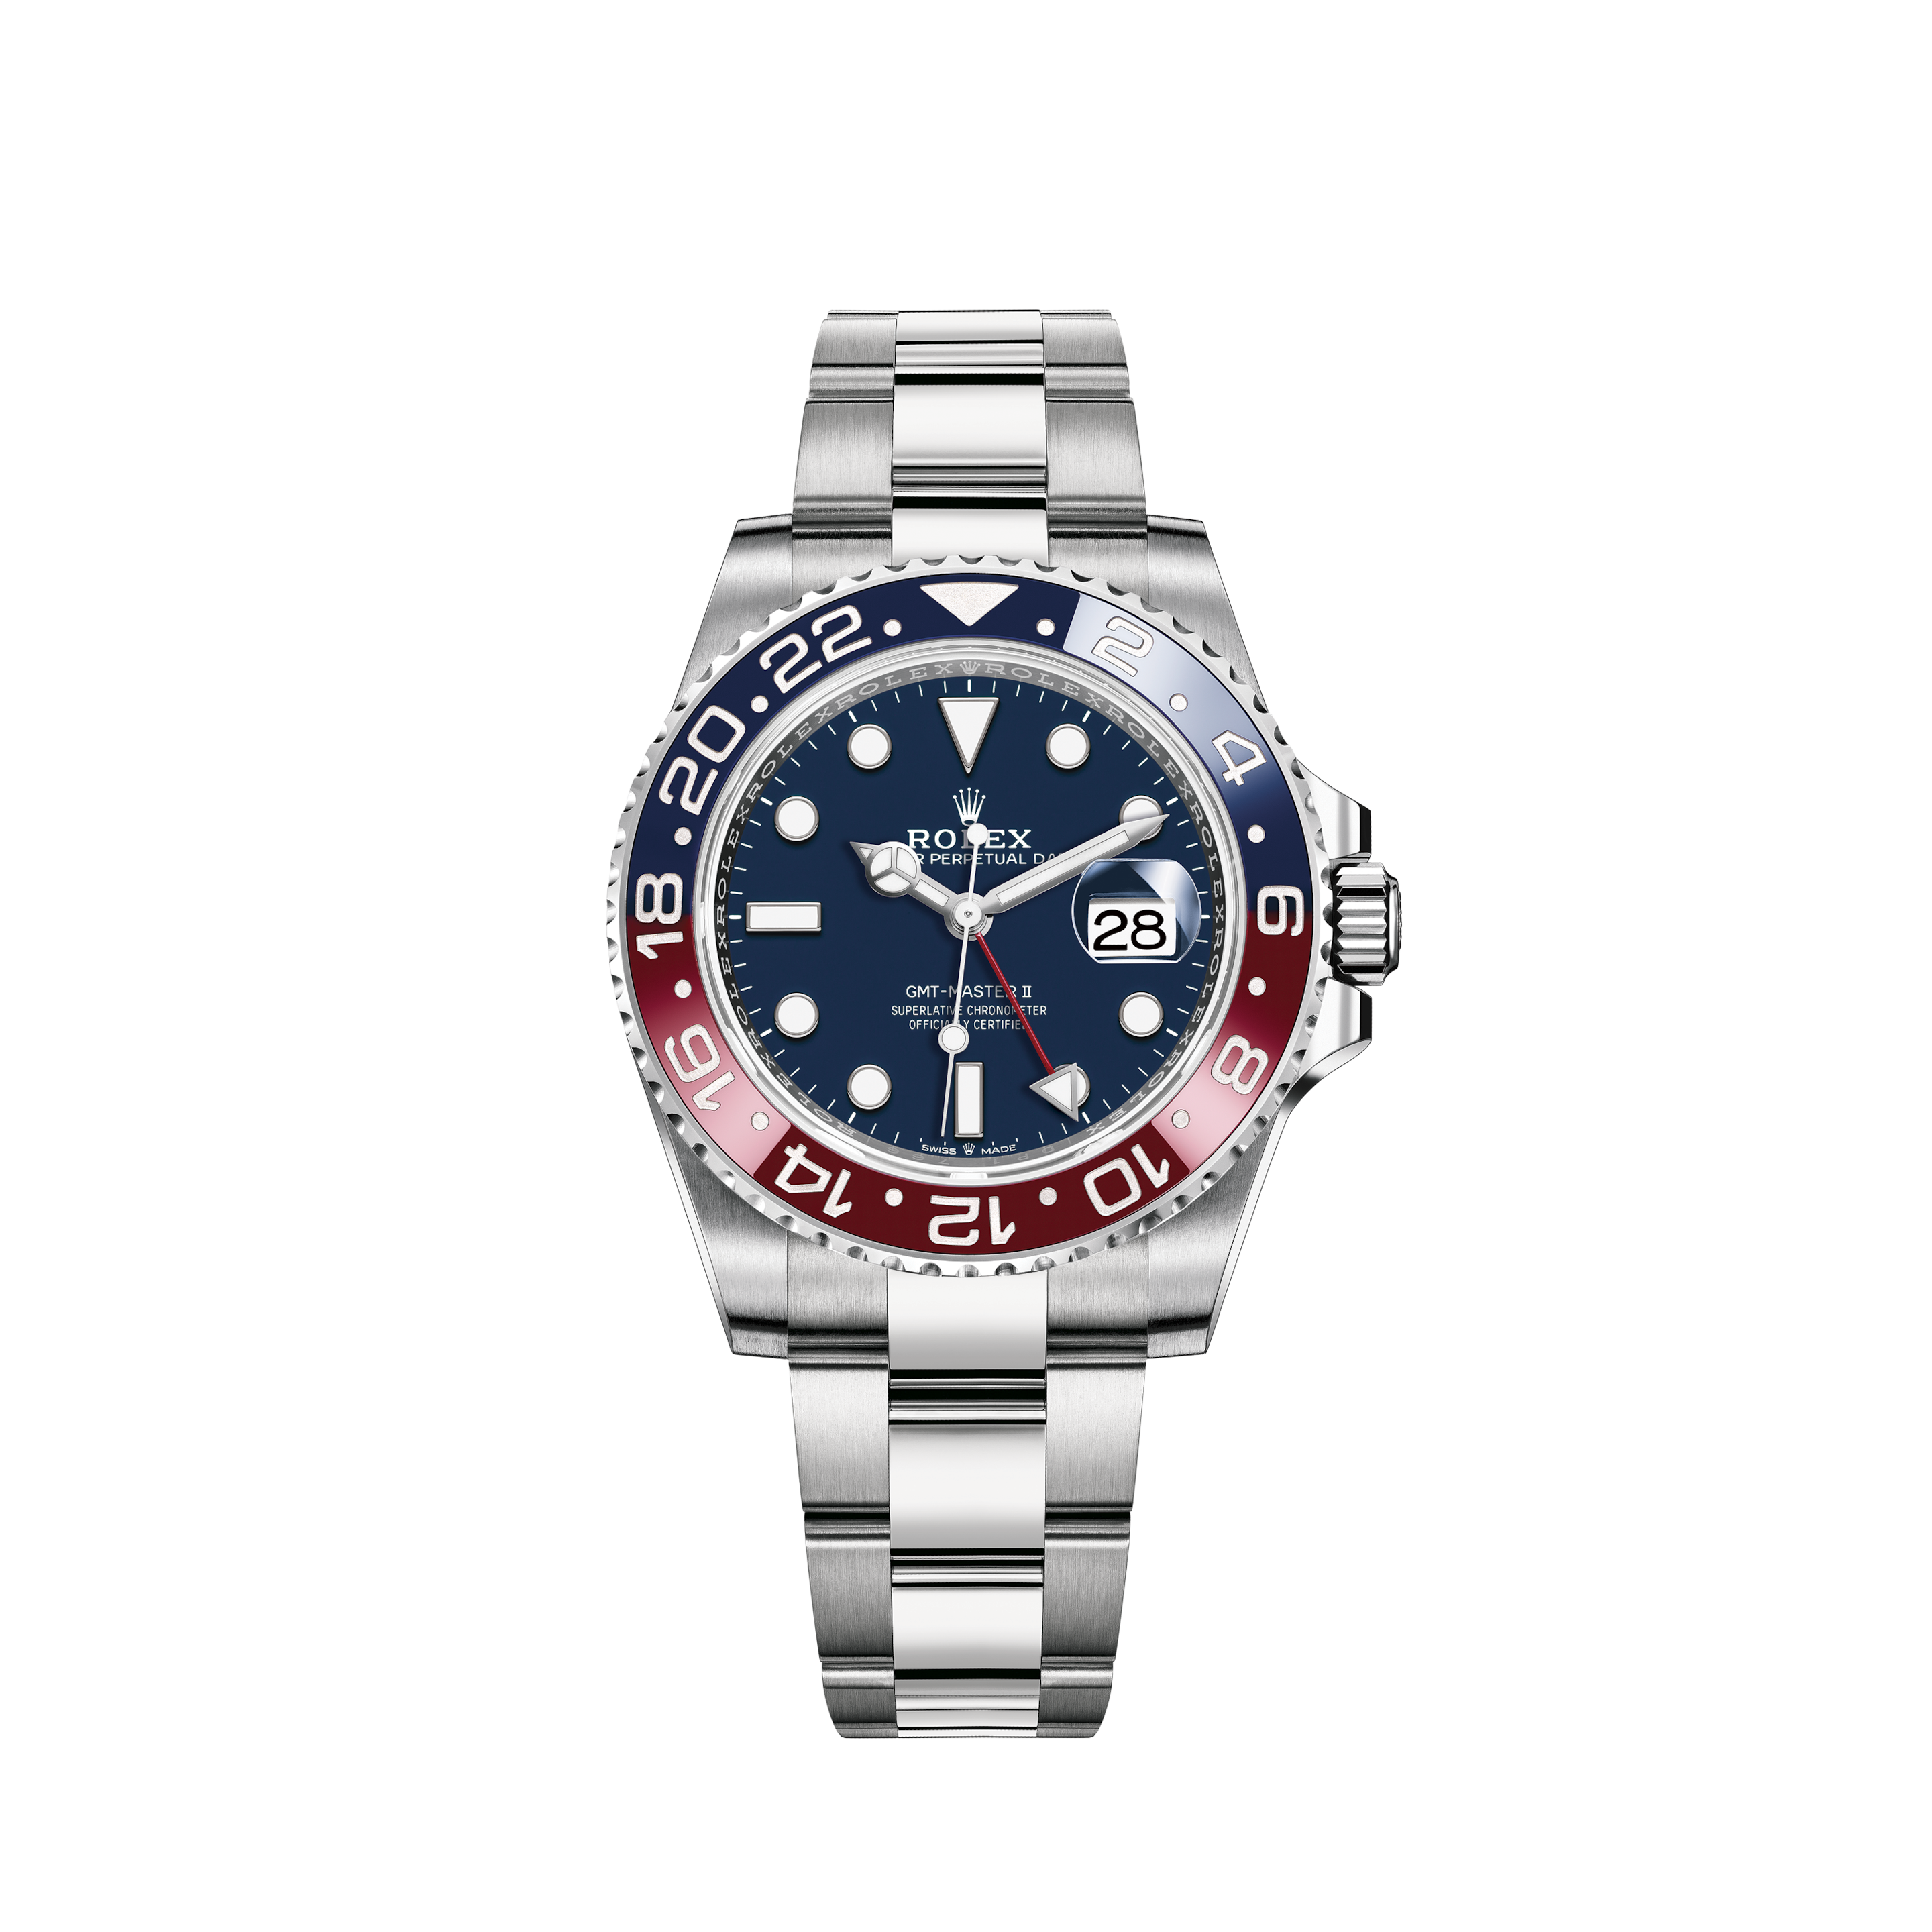 Rolex Datejust 36mm Steel SilverDiamondDial (BOXonly1991)Rolex Datejust 36mm Steel Watch 2.85ct Diamond Bezel/Pave Case/Aqua Blue Dial